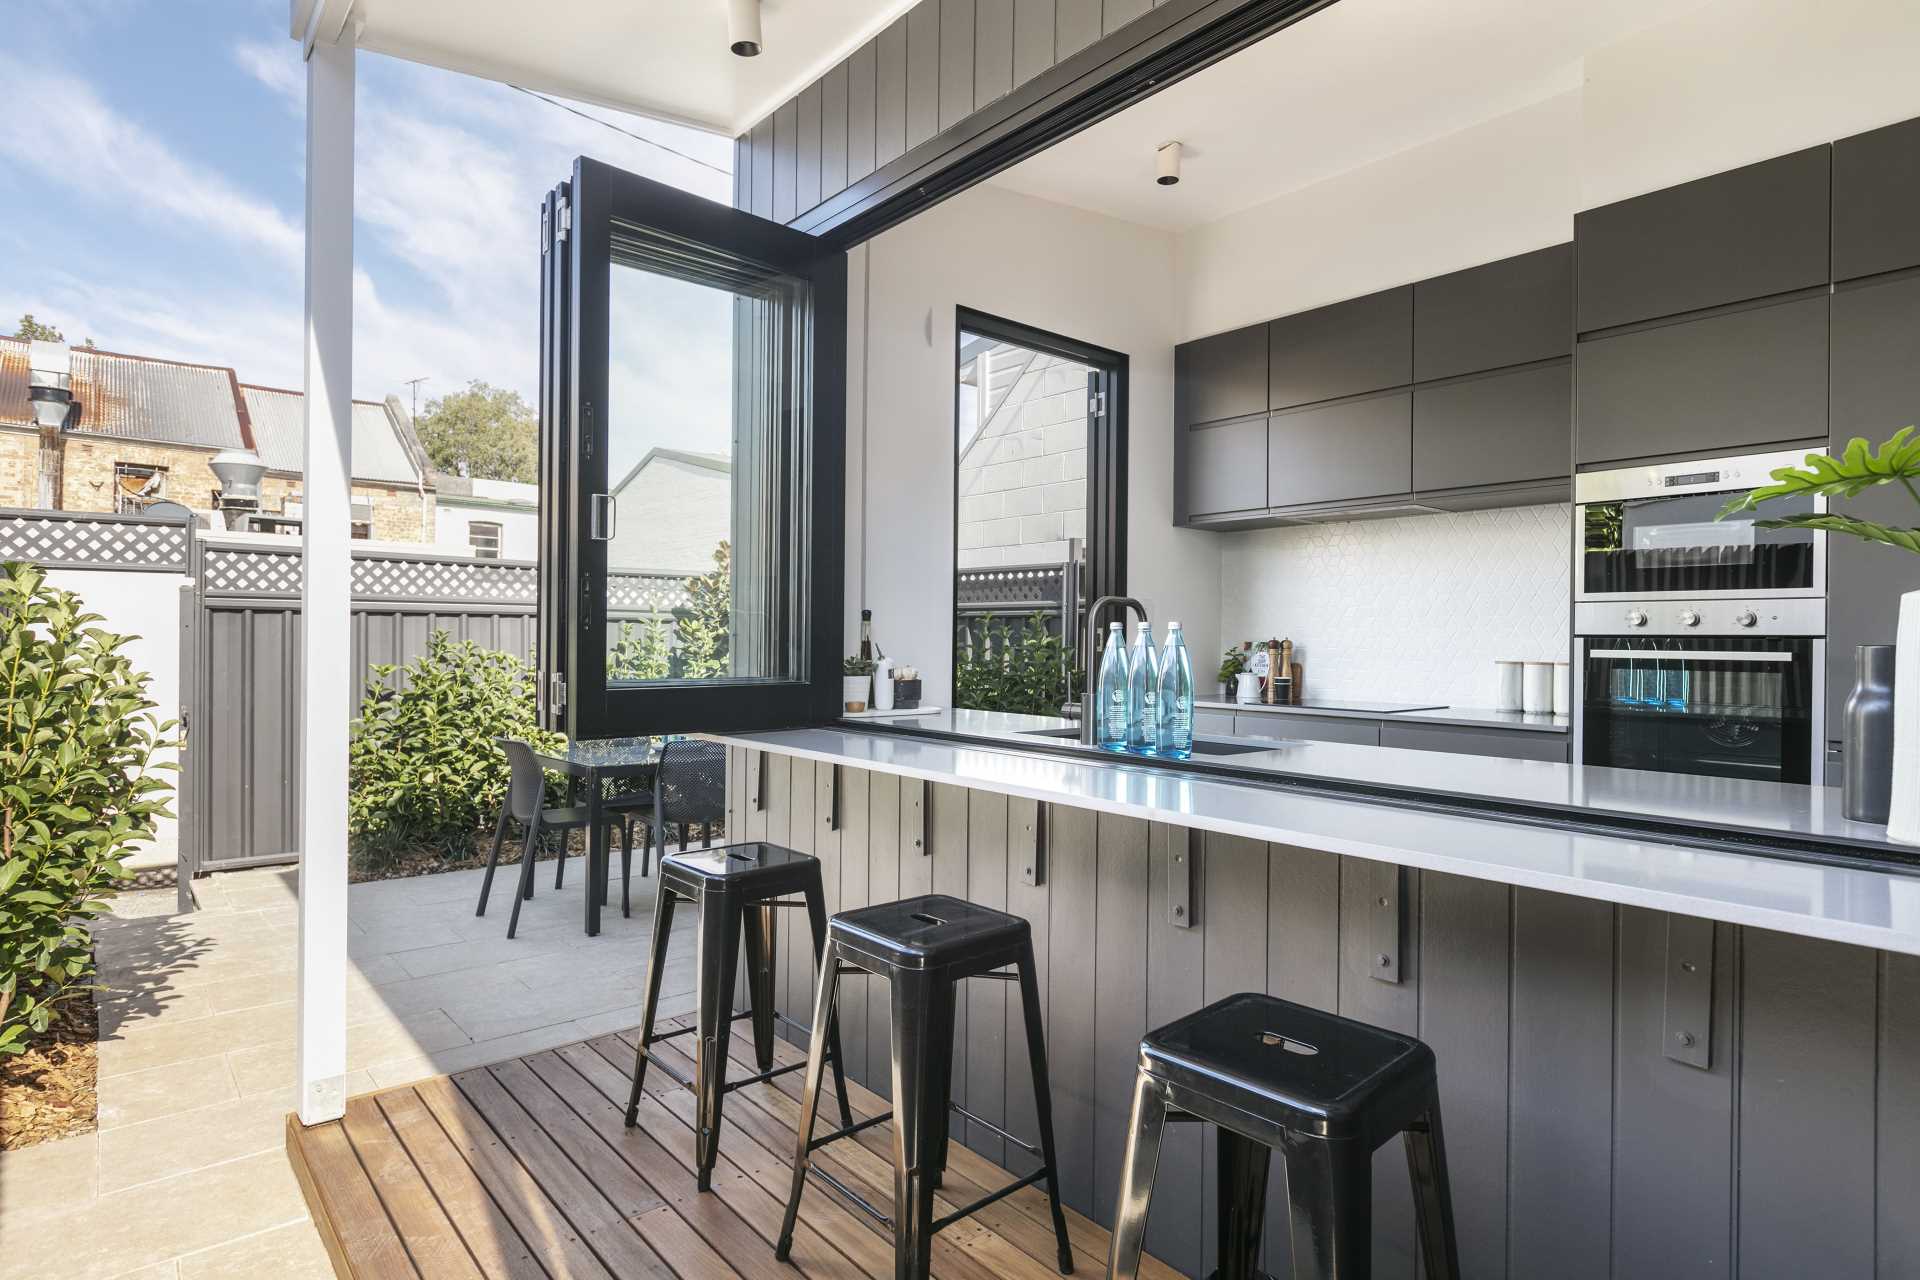 A modern kitchen opens to an outdoor bar area.